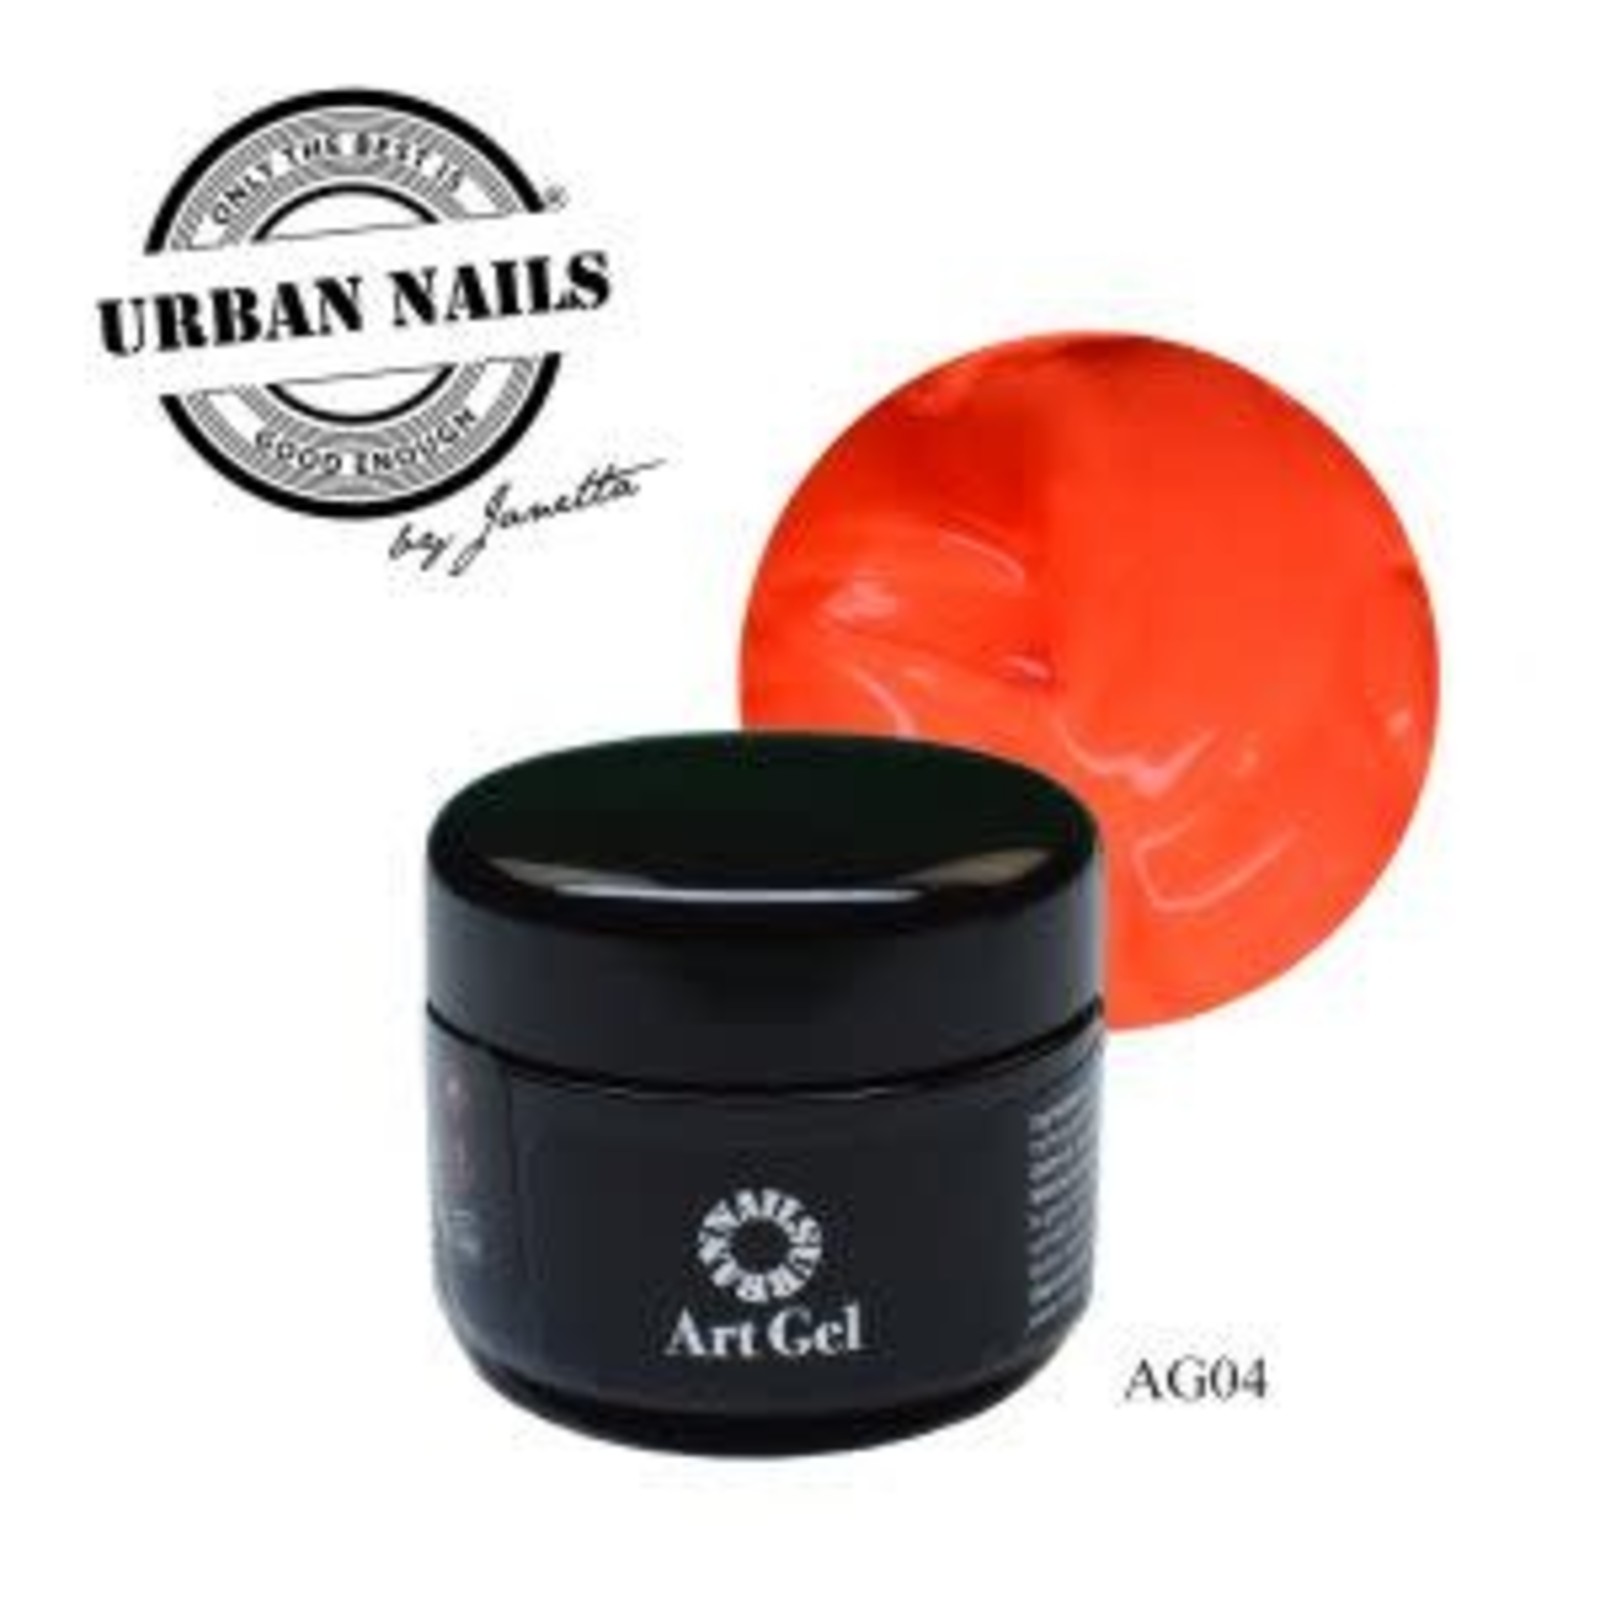 Urban nails Art gel AG04